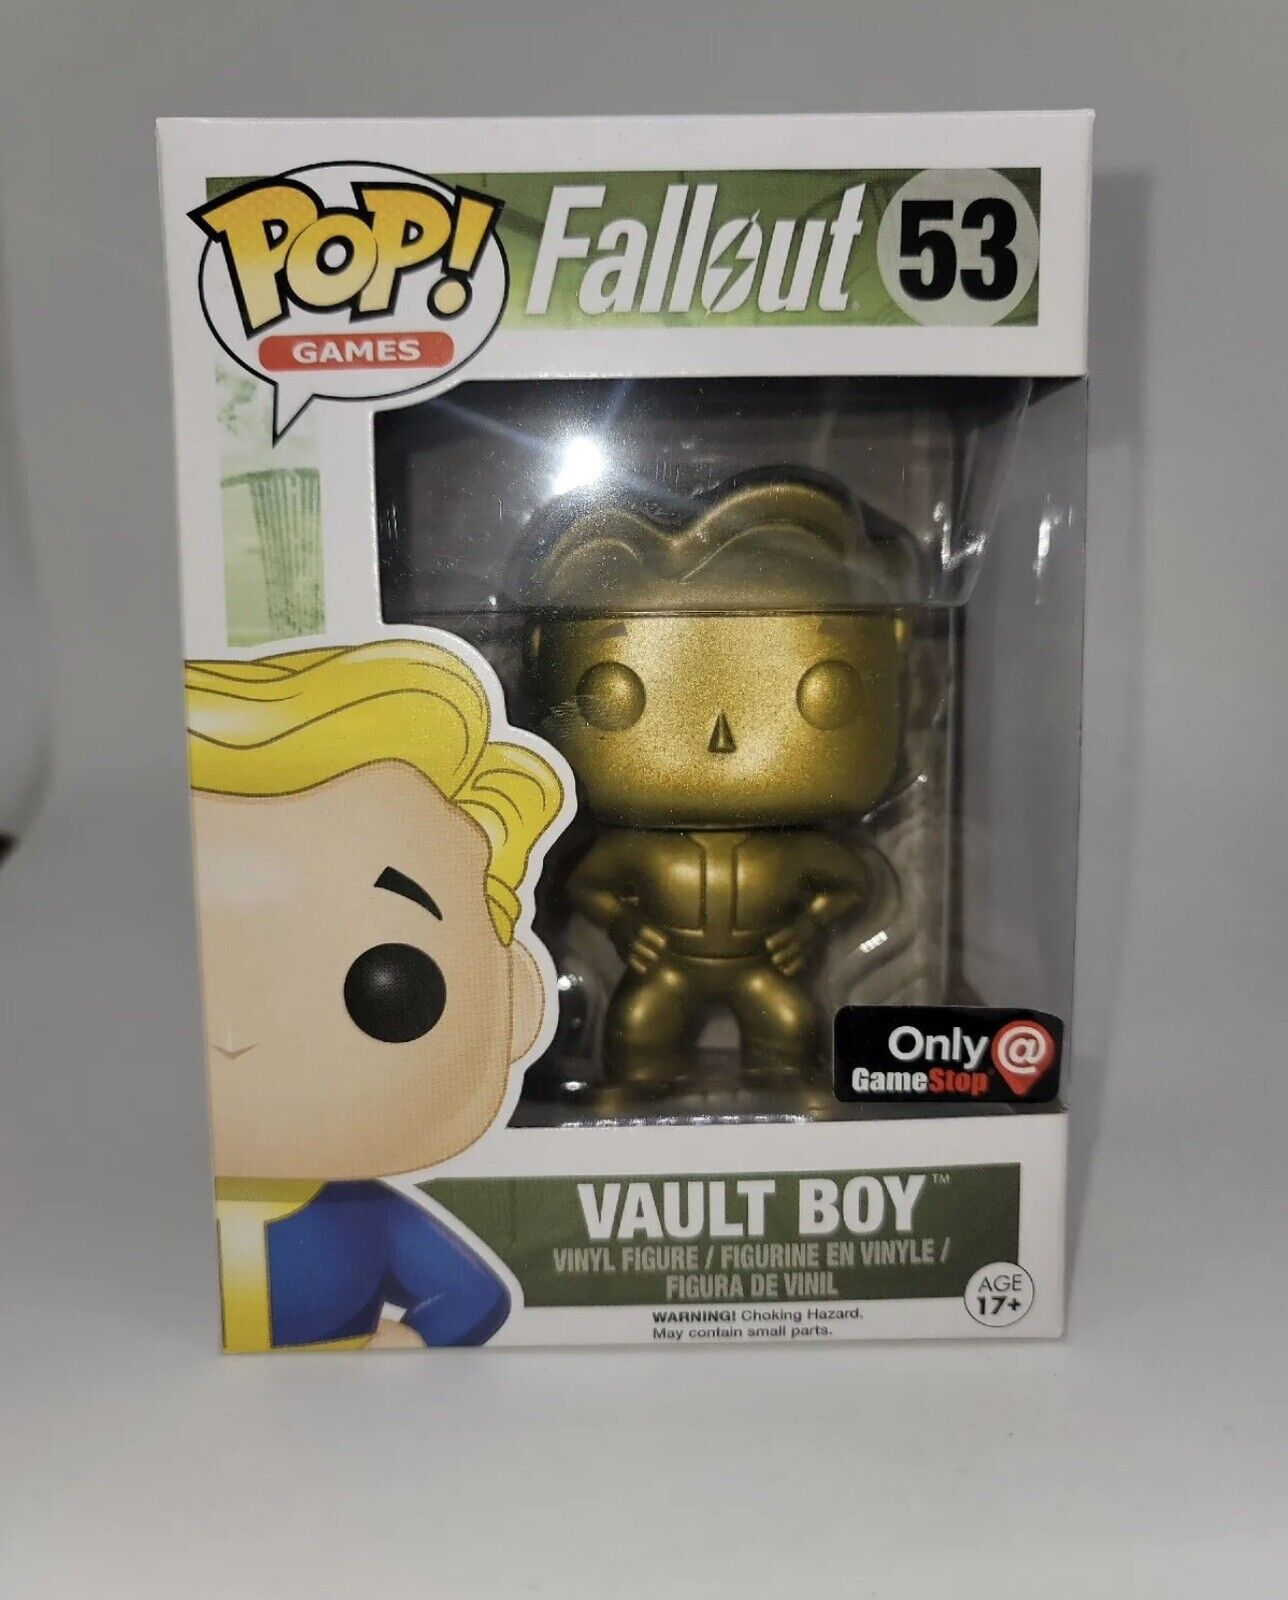 Vault Boy #53 Gold Funko Pop Games Fallout Gamestop Exclusive